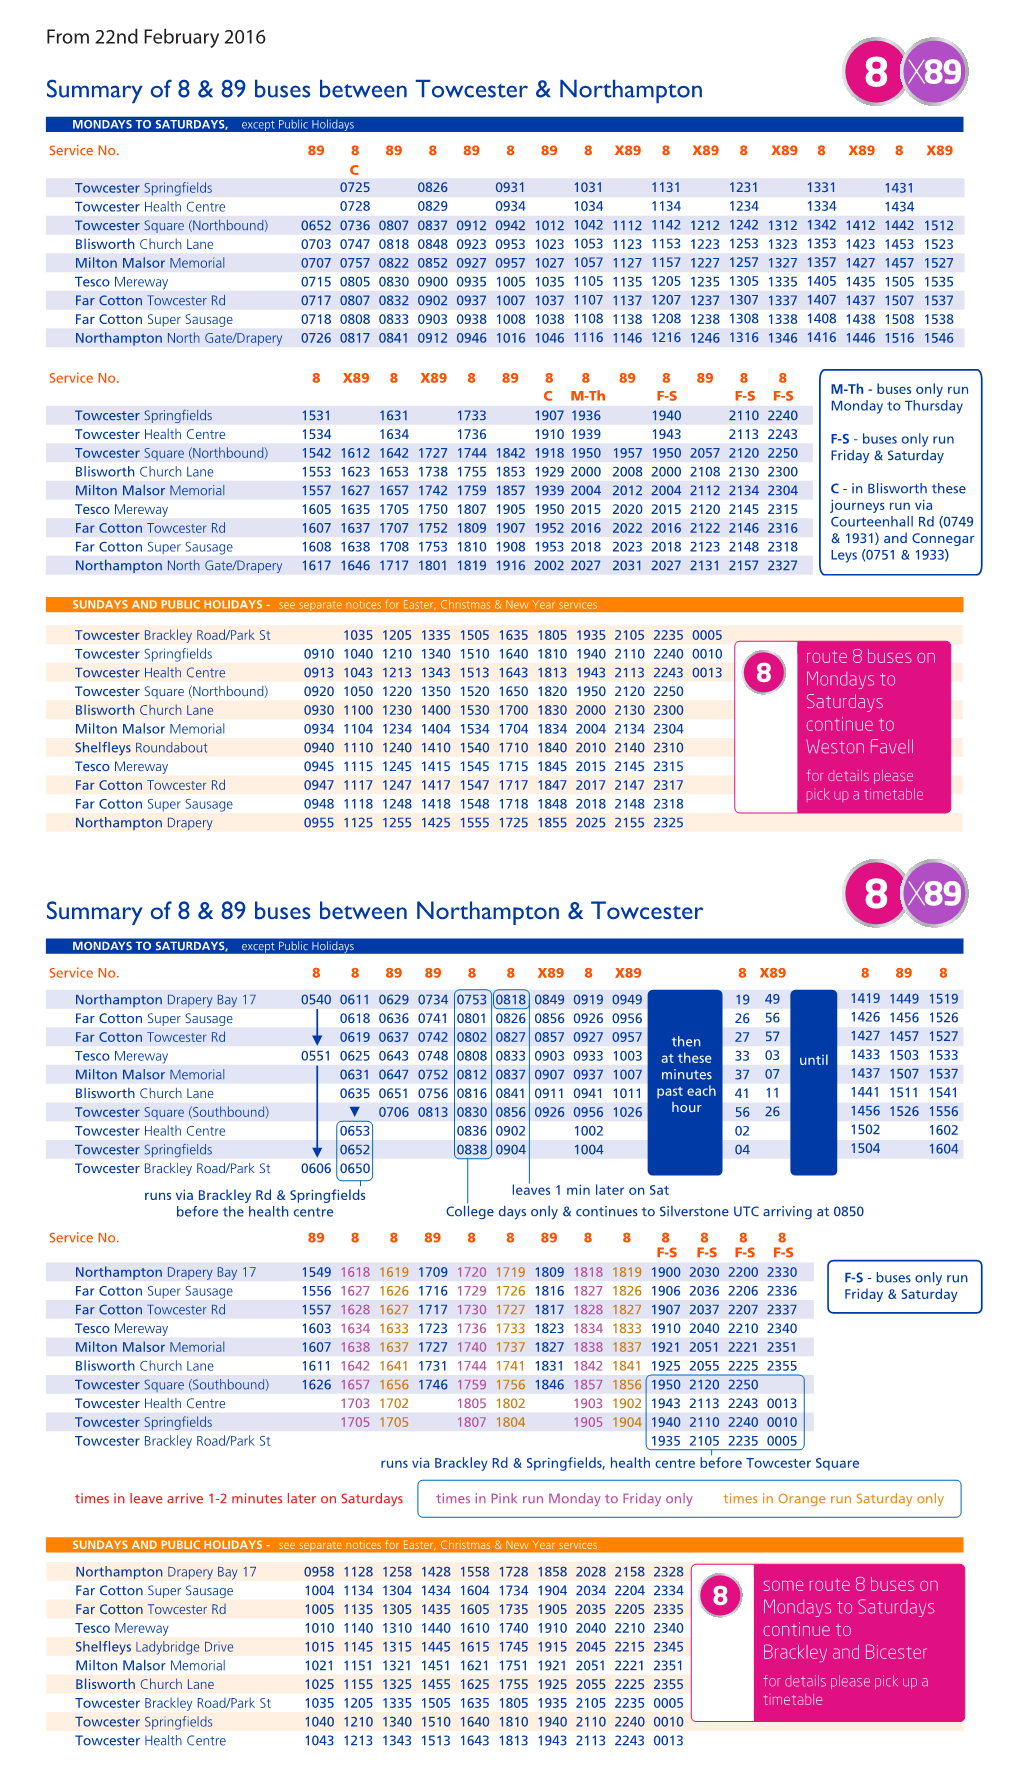 Summary of 8 & 89 Buses Between Towcester & Northampton